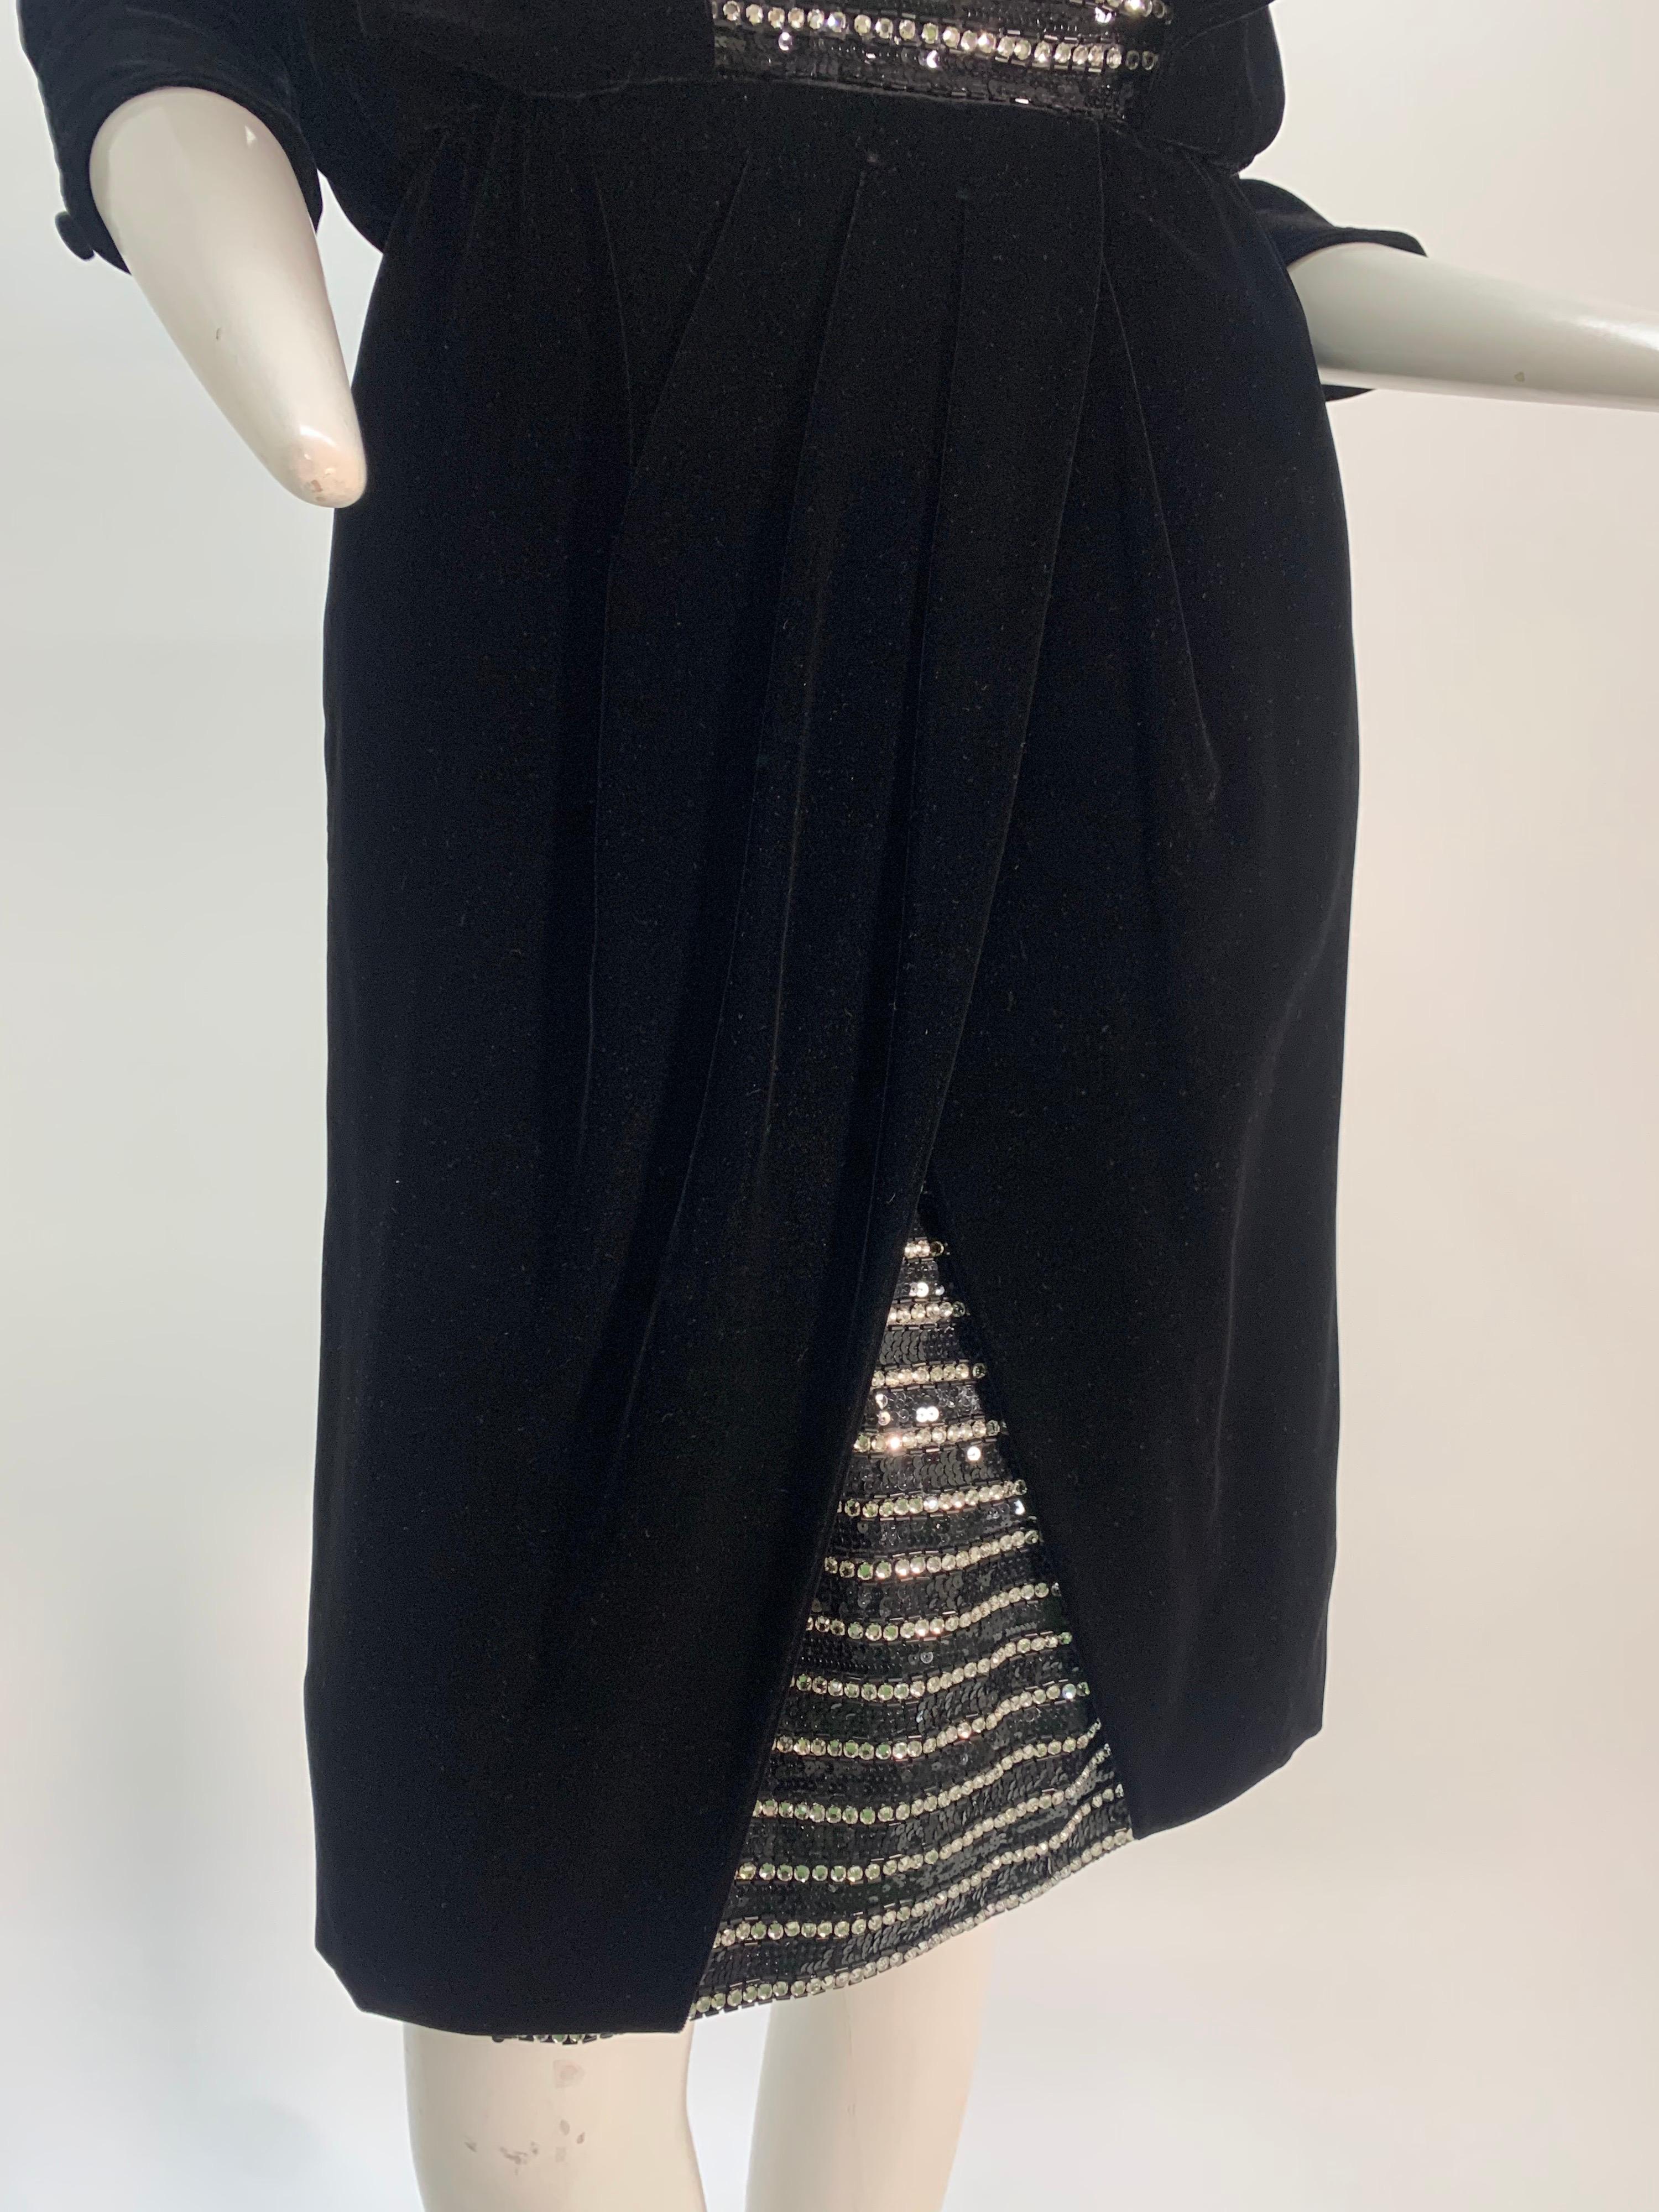 1980 Carolyne Roehm Black Velvet Cocktail Dress W/ Rhinestone & Sequin Stripes For Sale 7